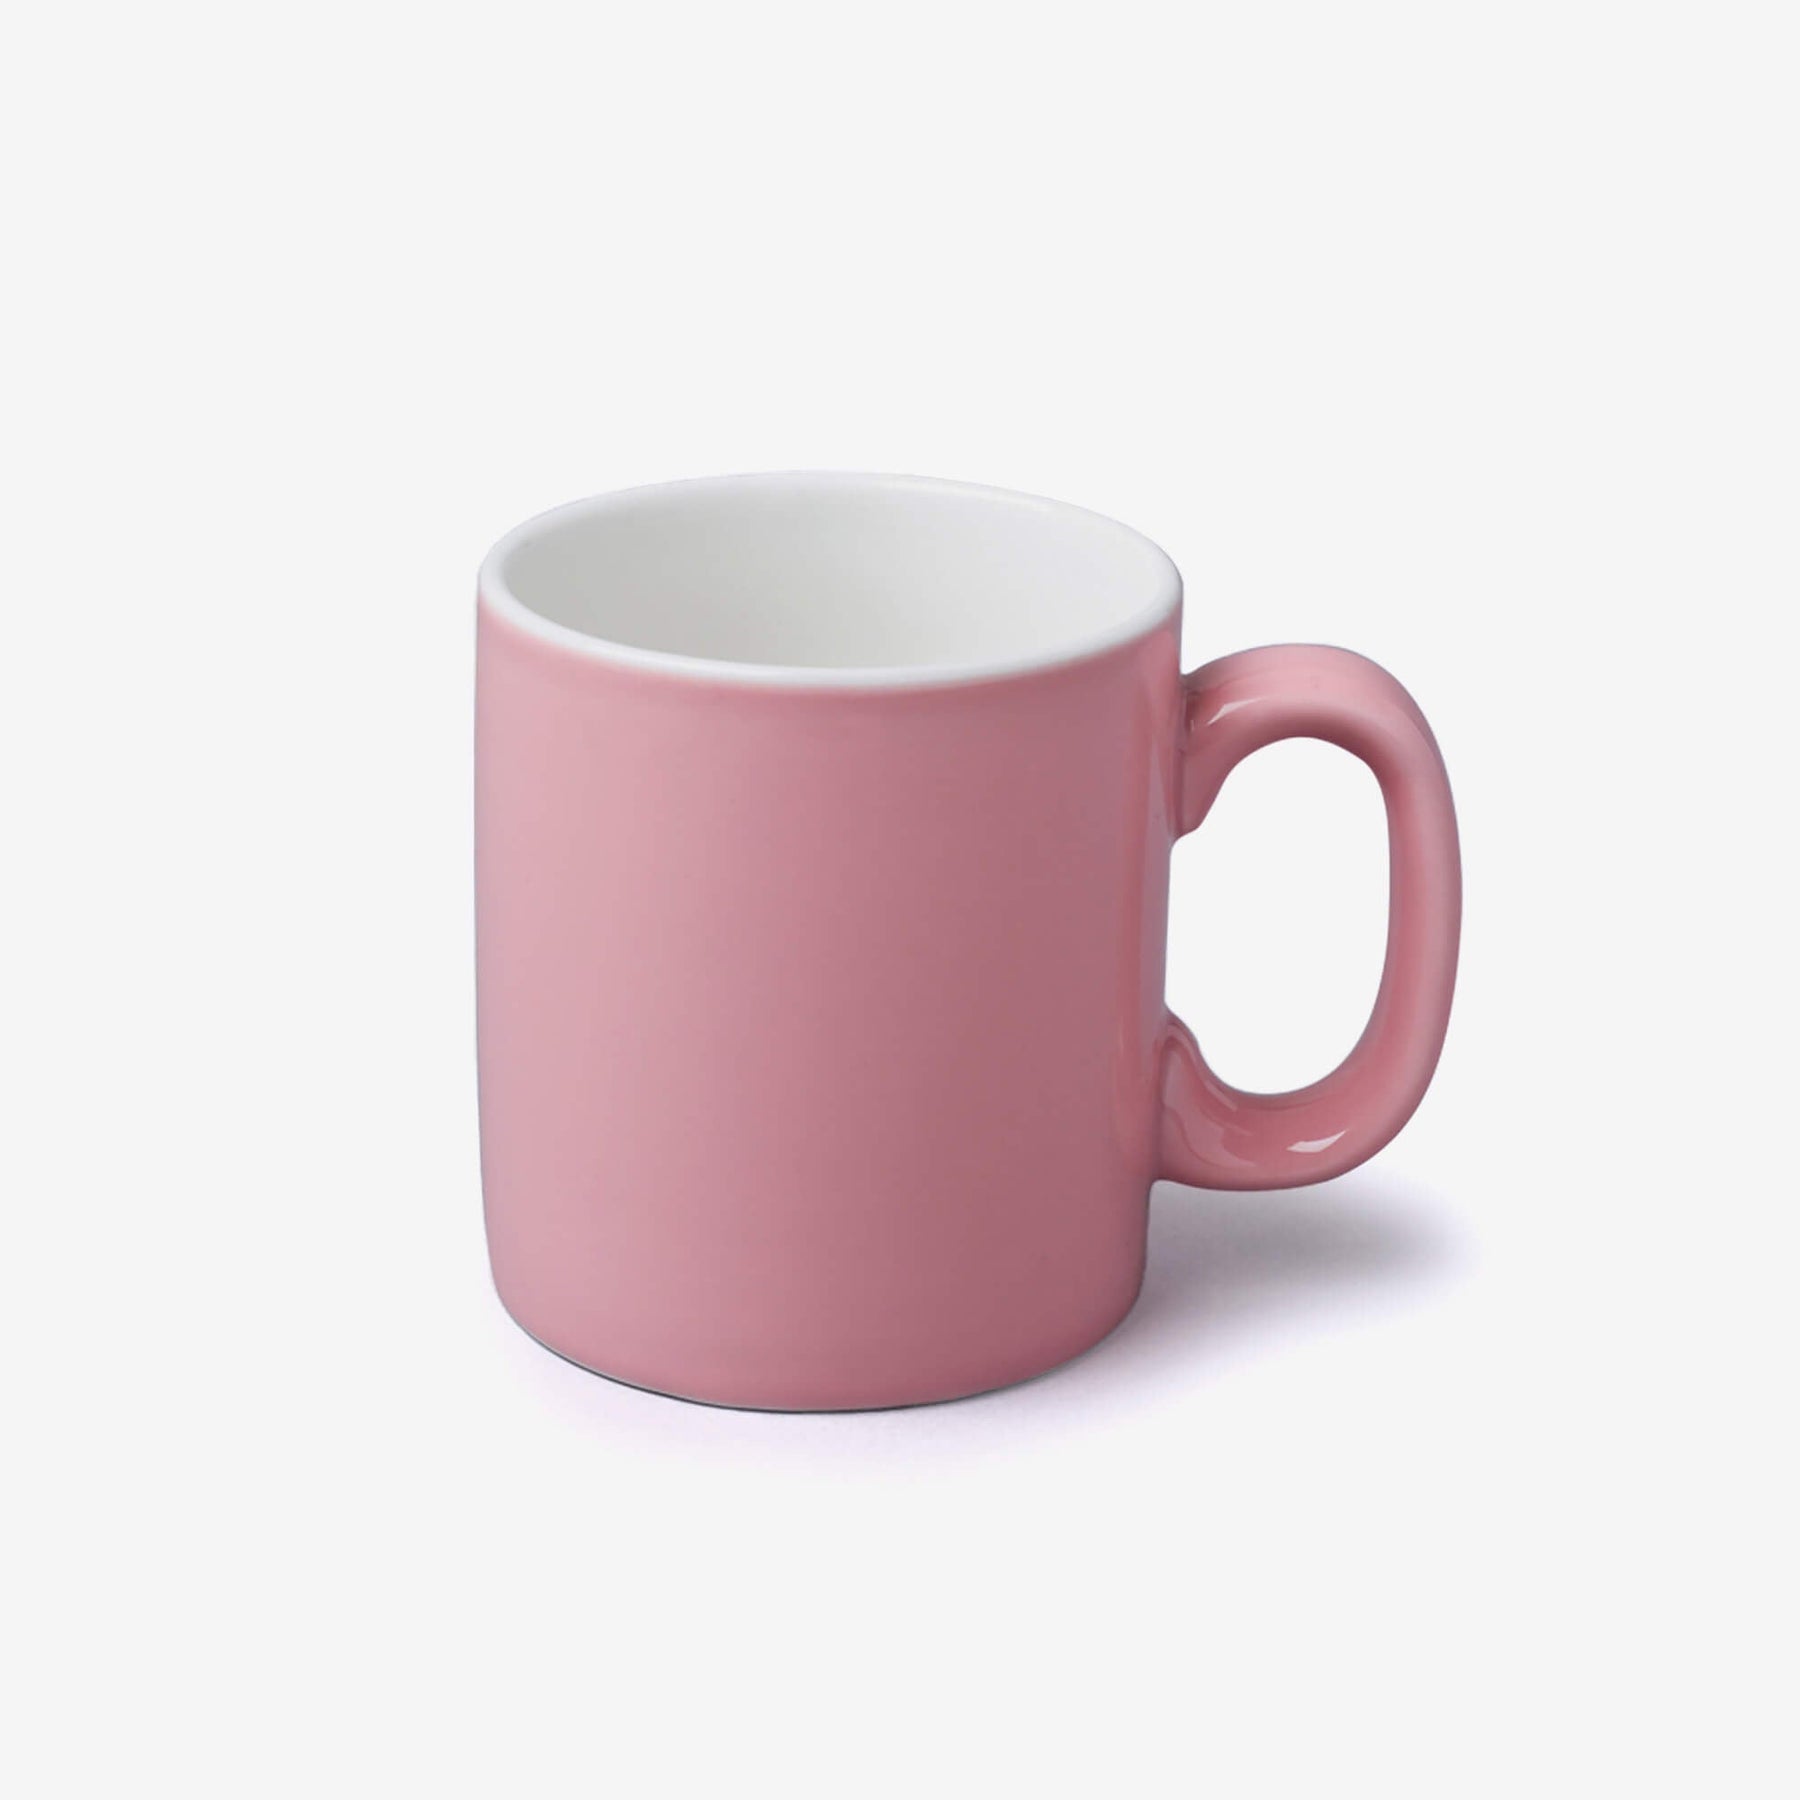 Porcelain Original Mug, 0.7 Pint